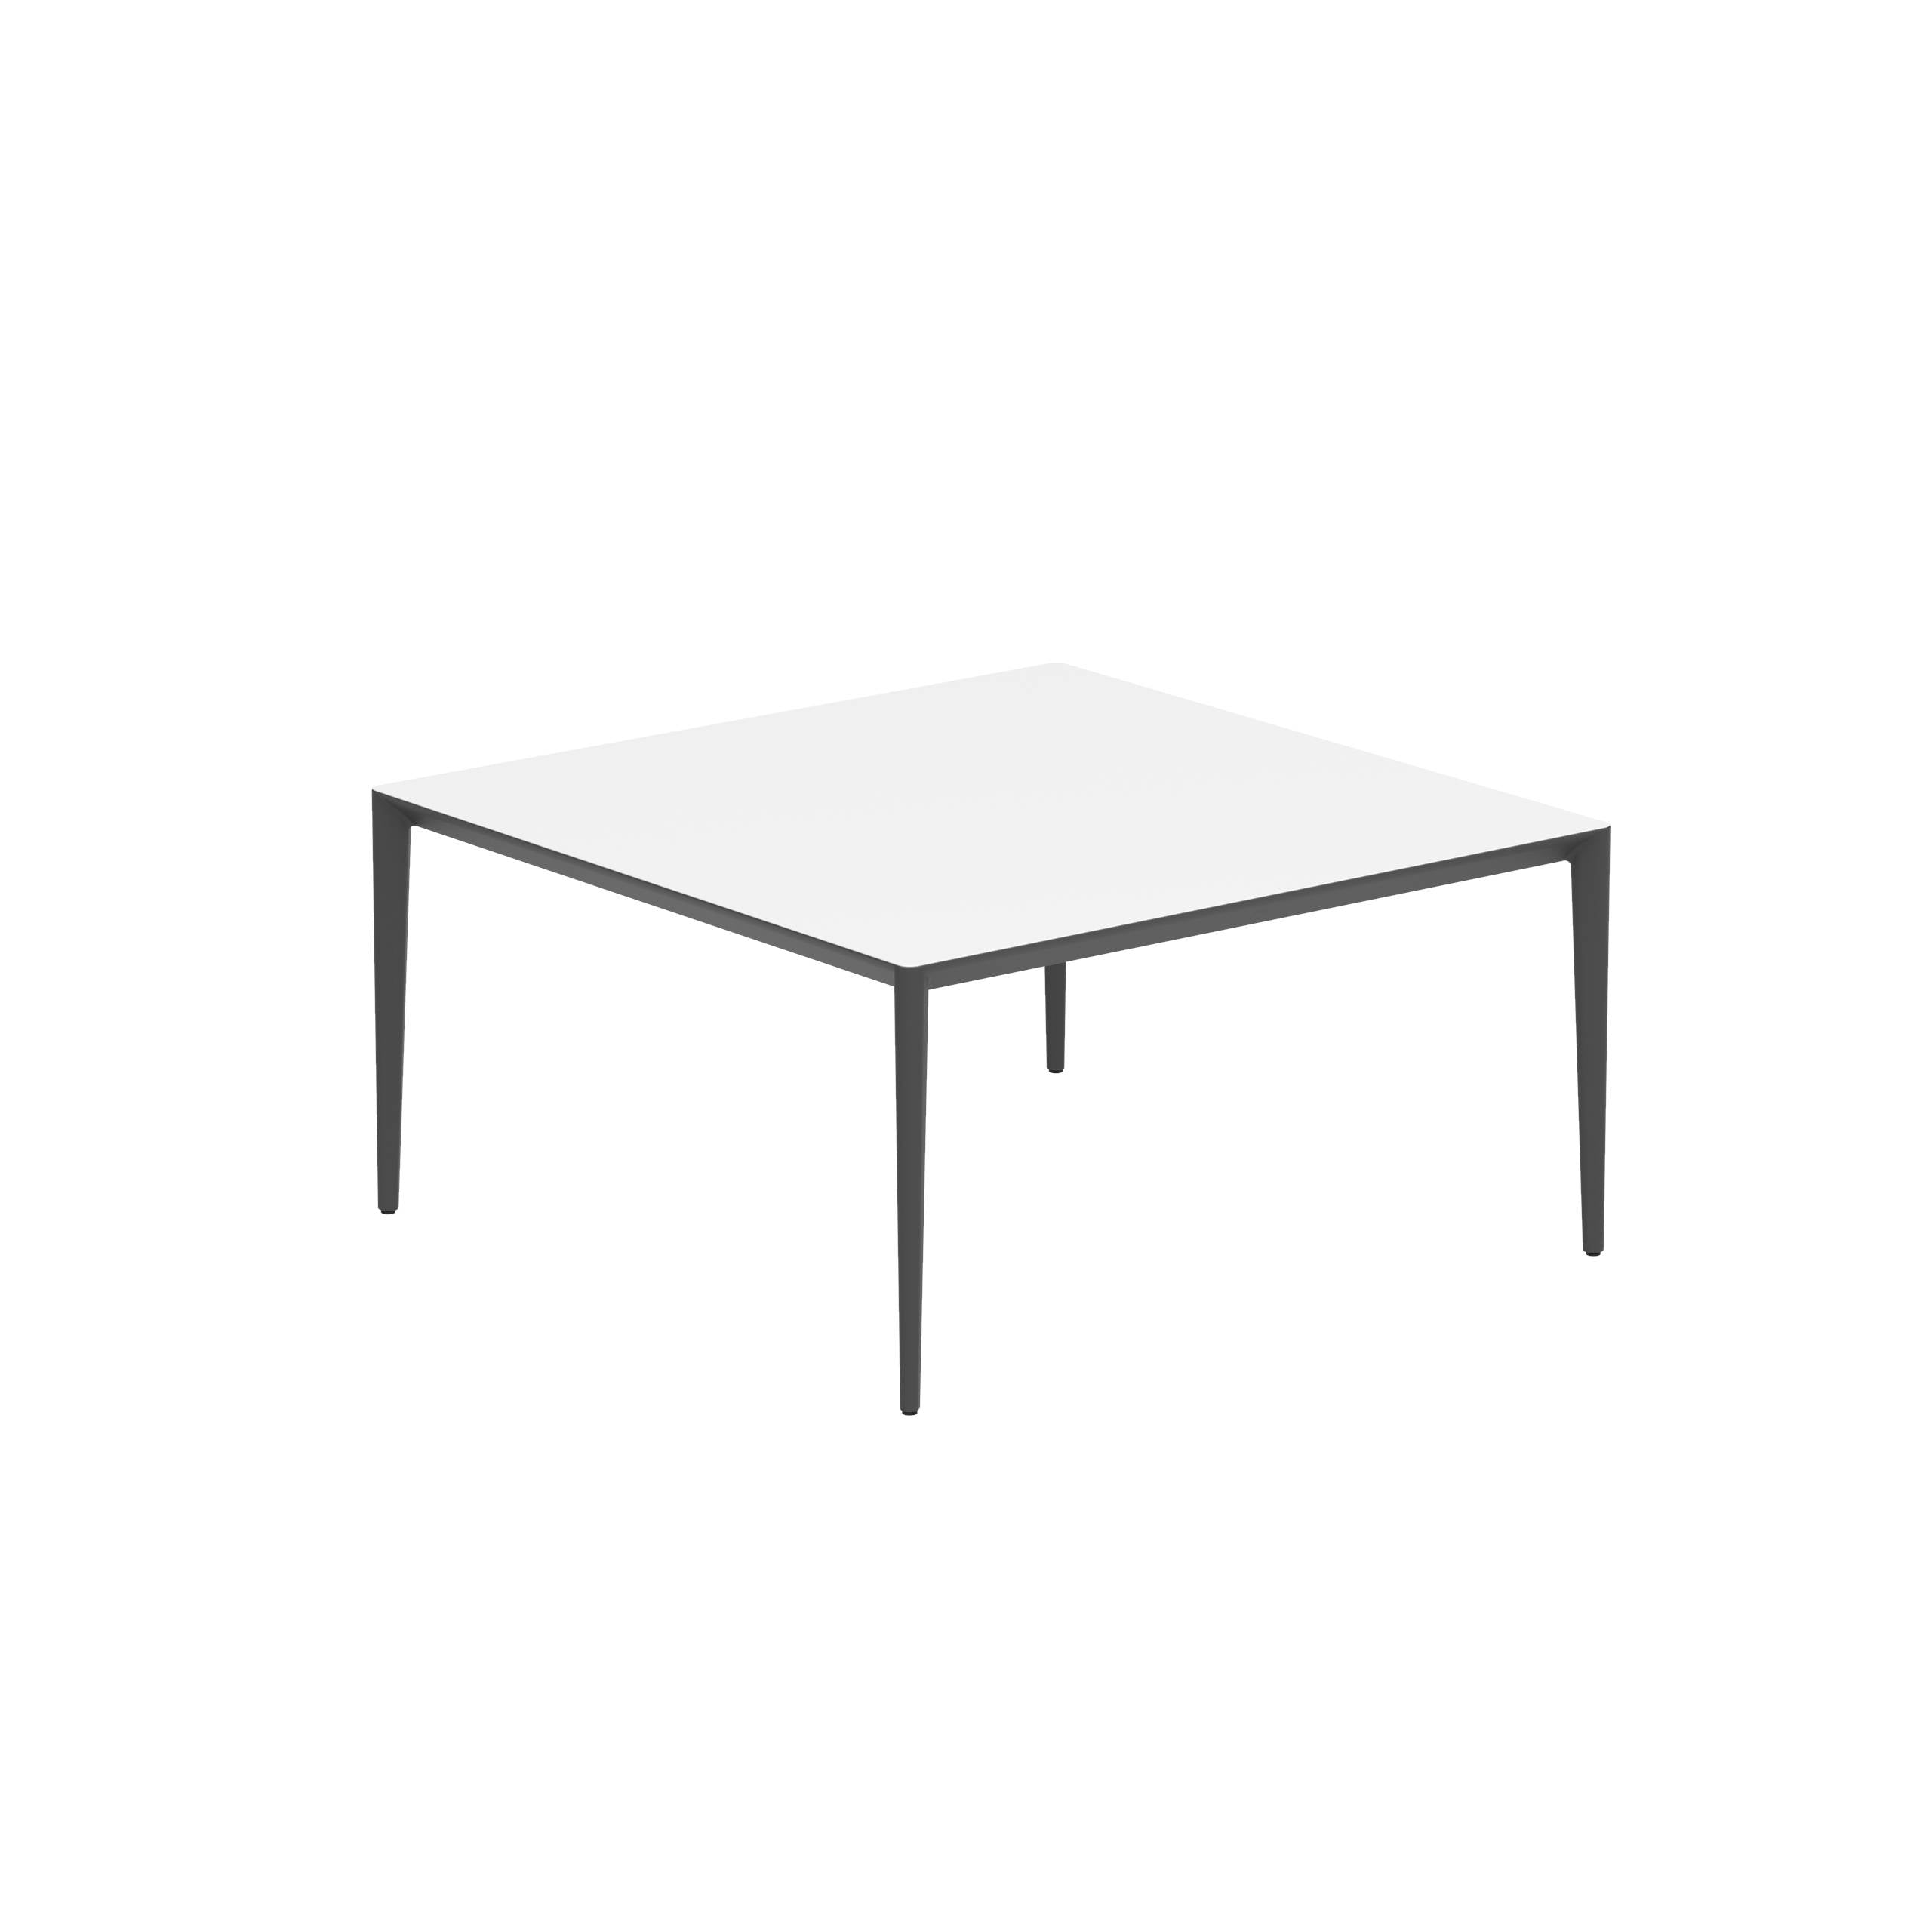 U-Nite Table 150x150cm Anthracite With Ceramic Tabletop White